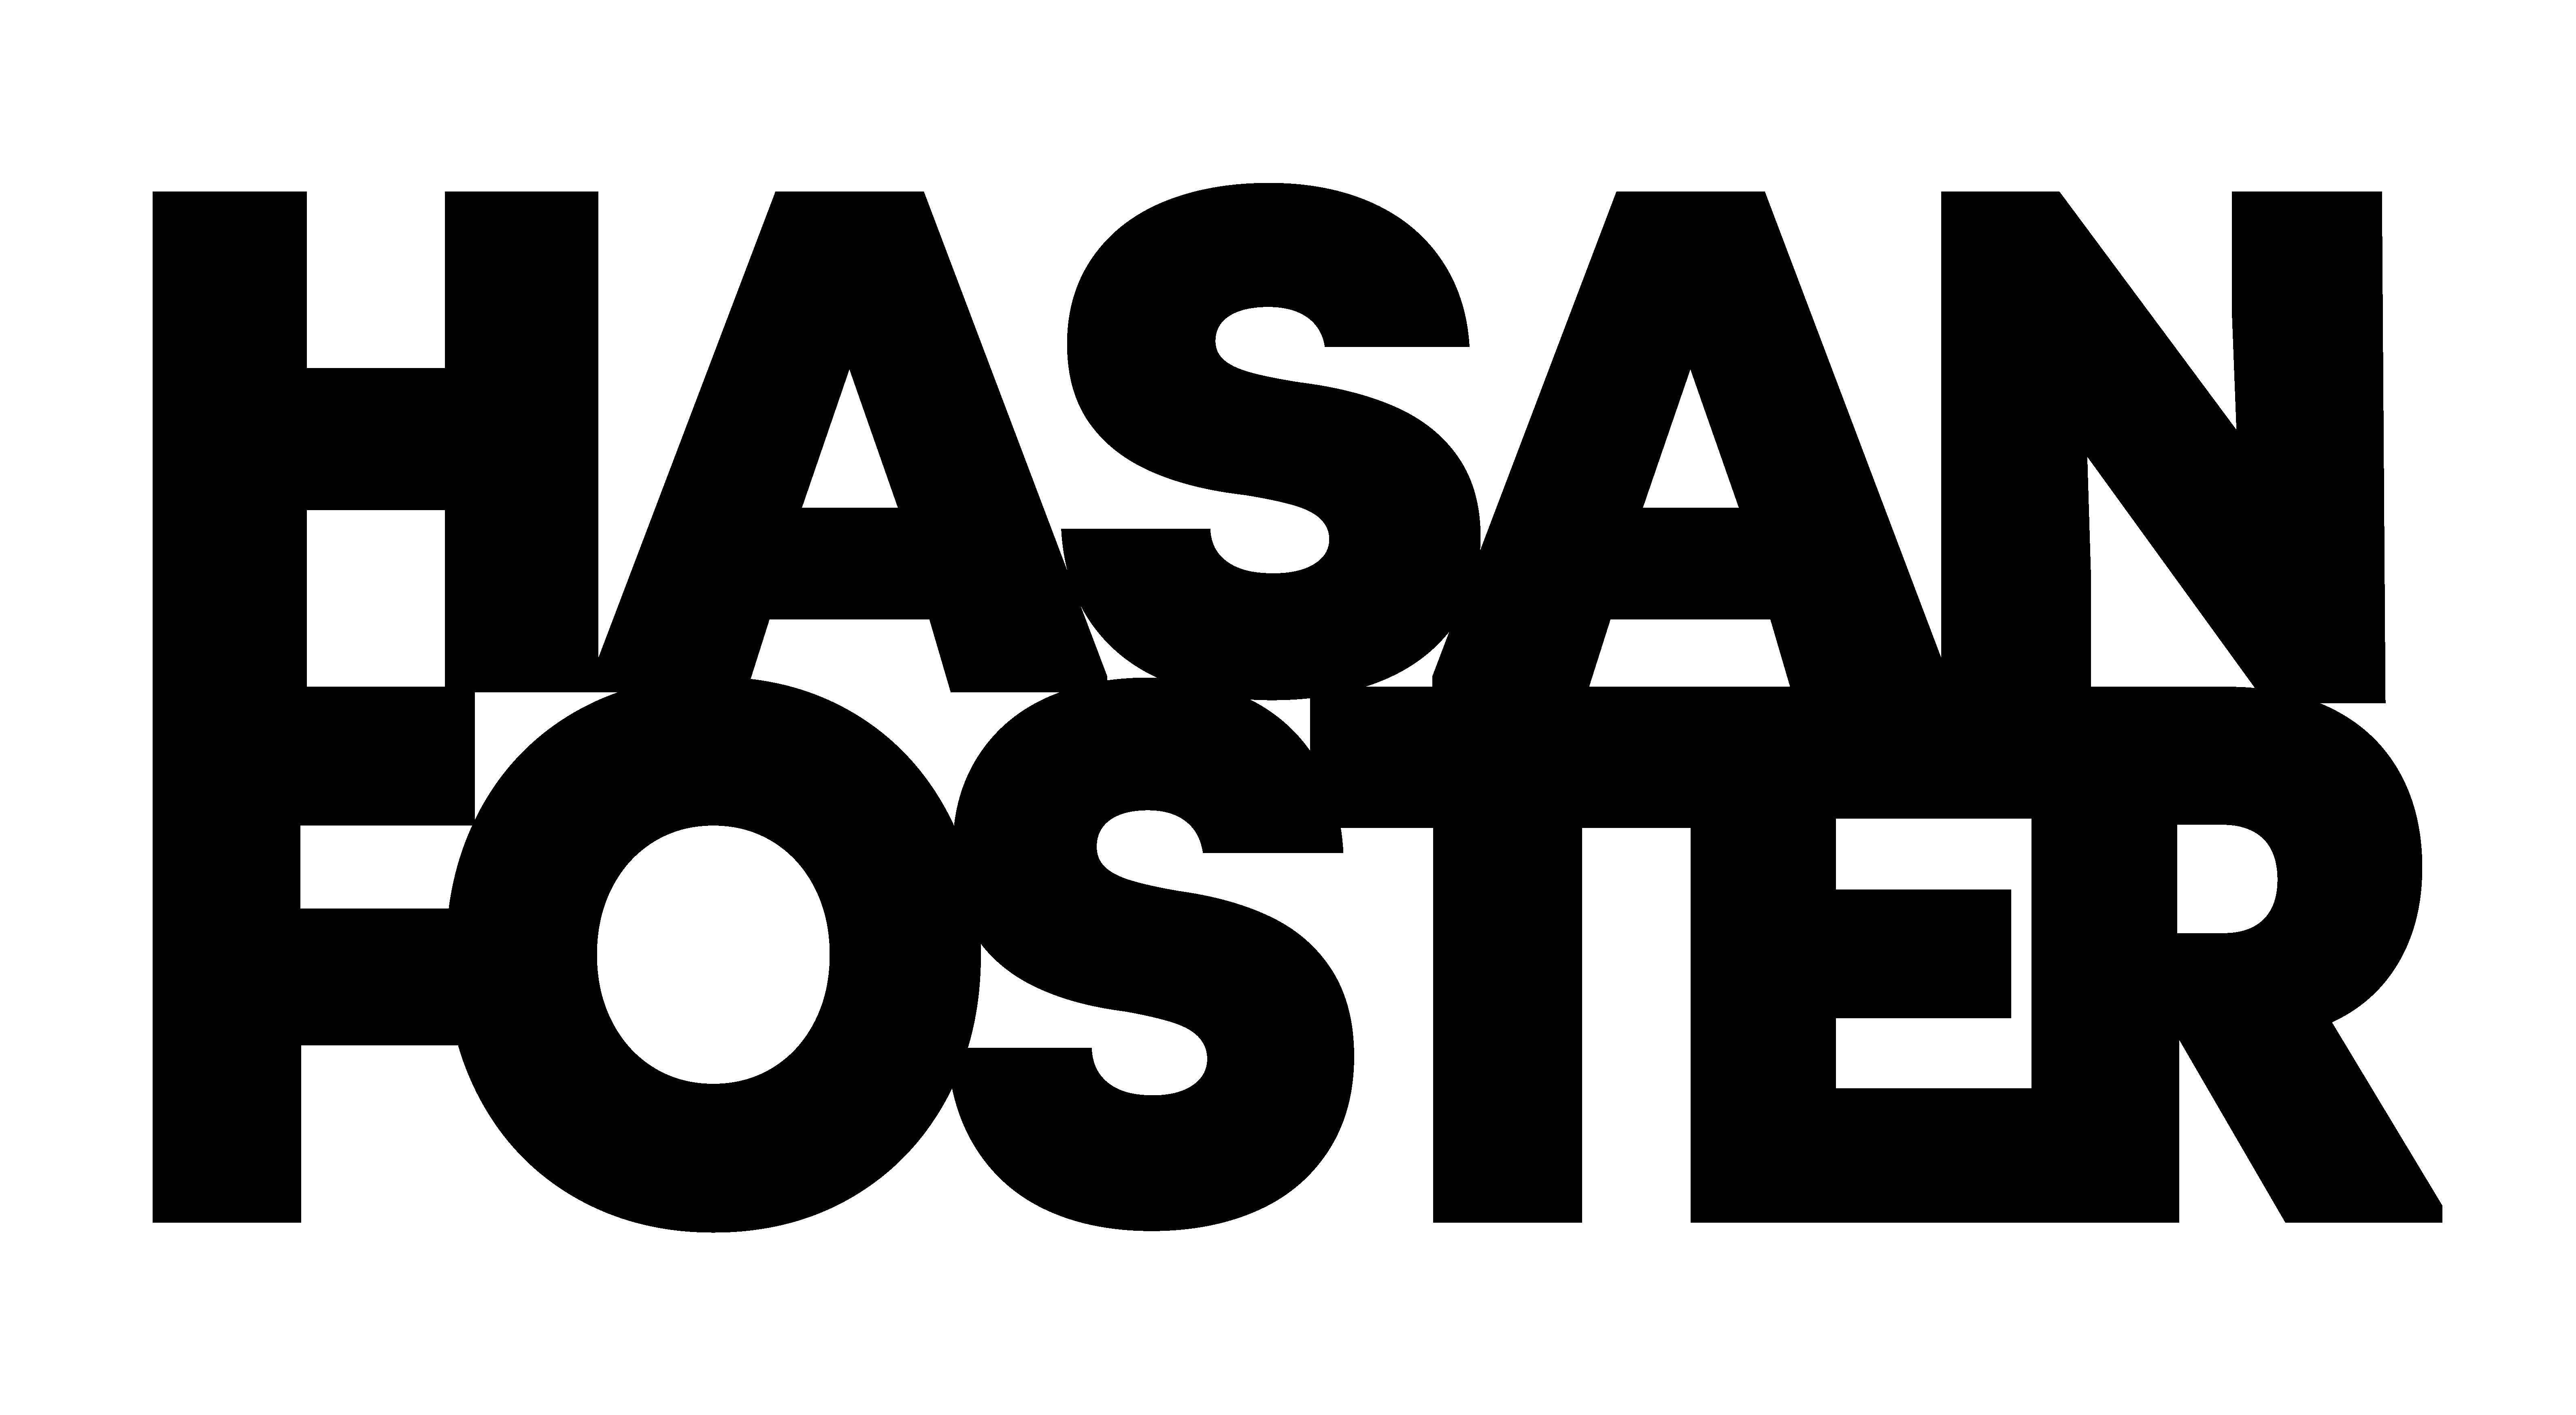 Hasan Foster